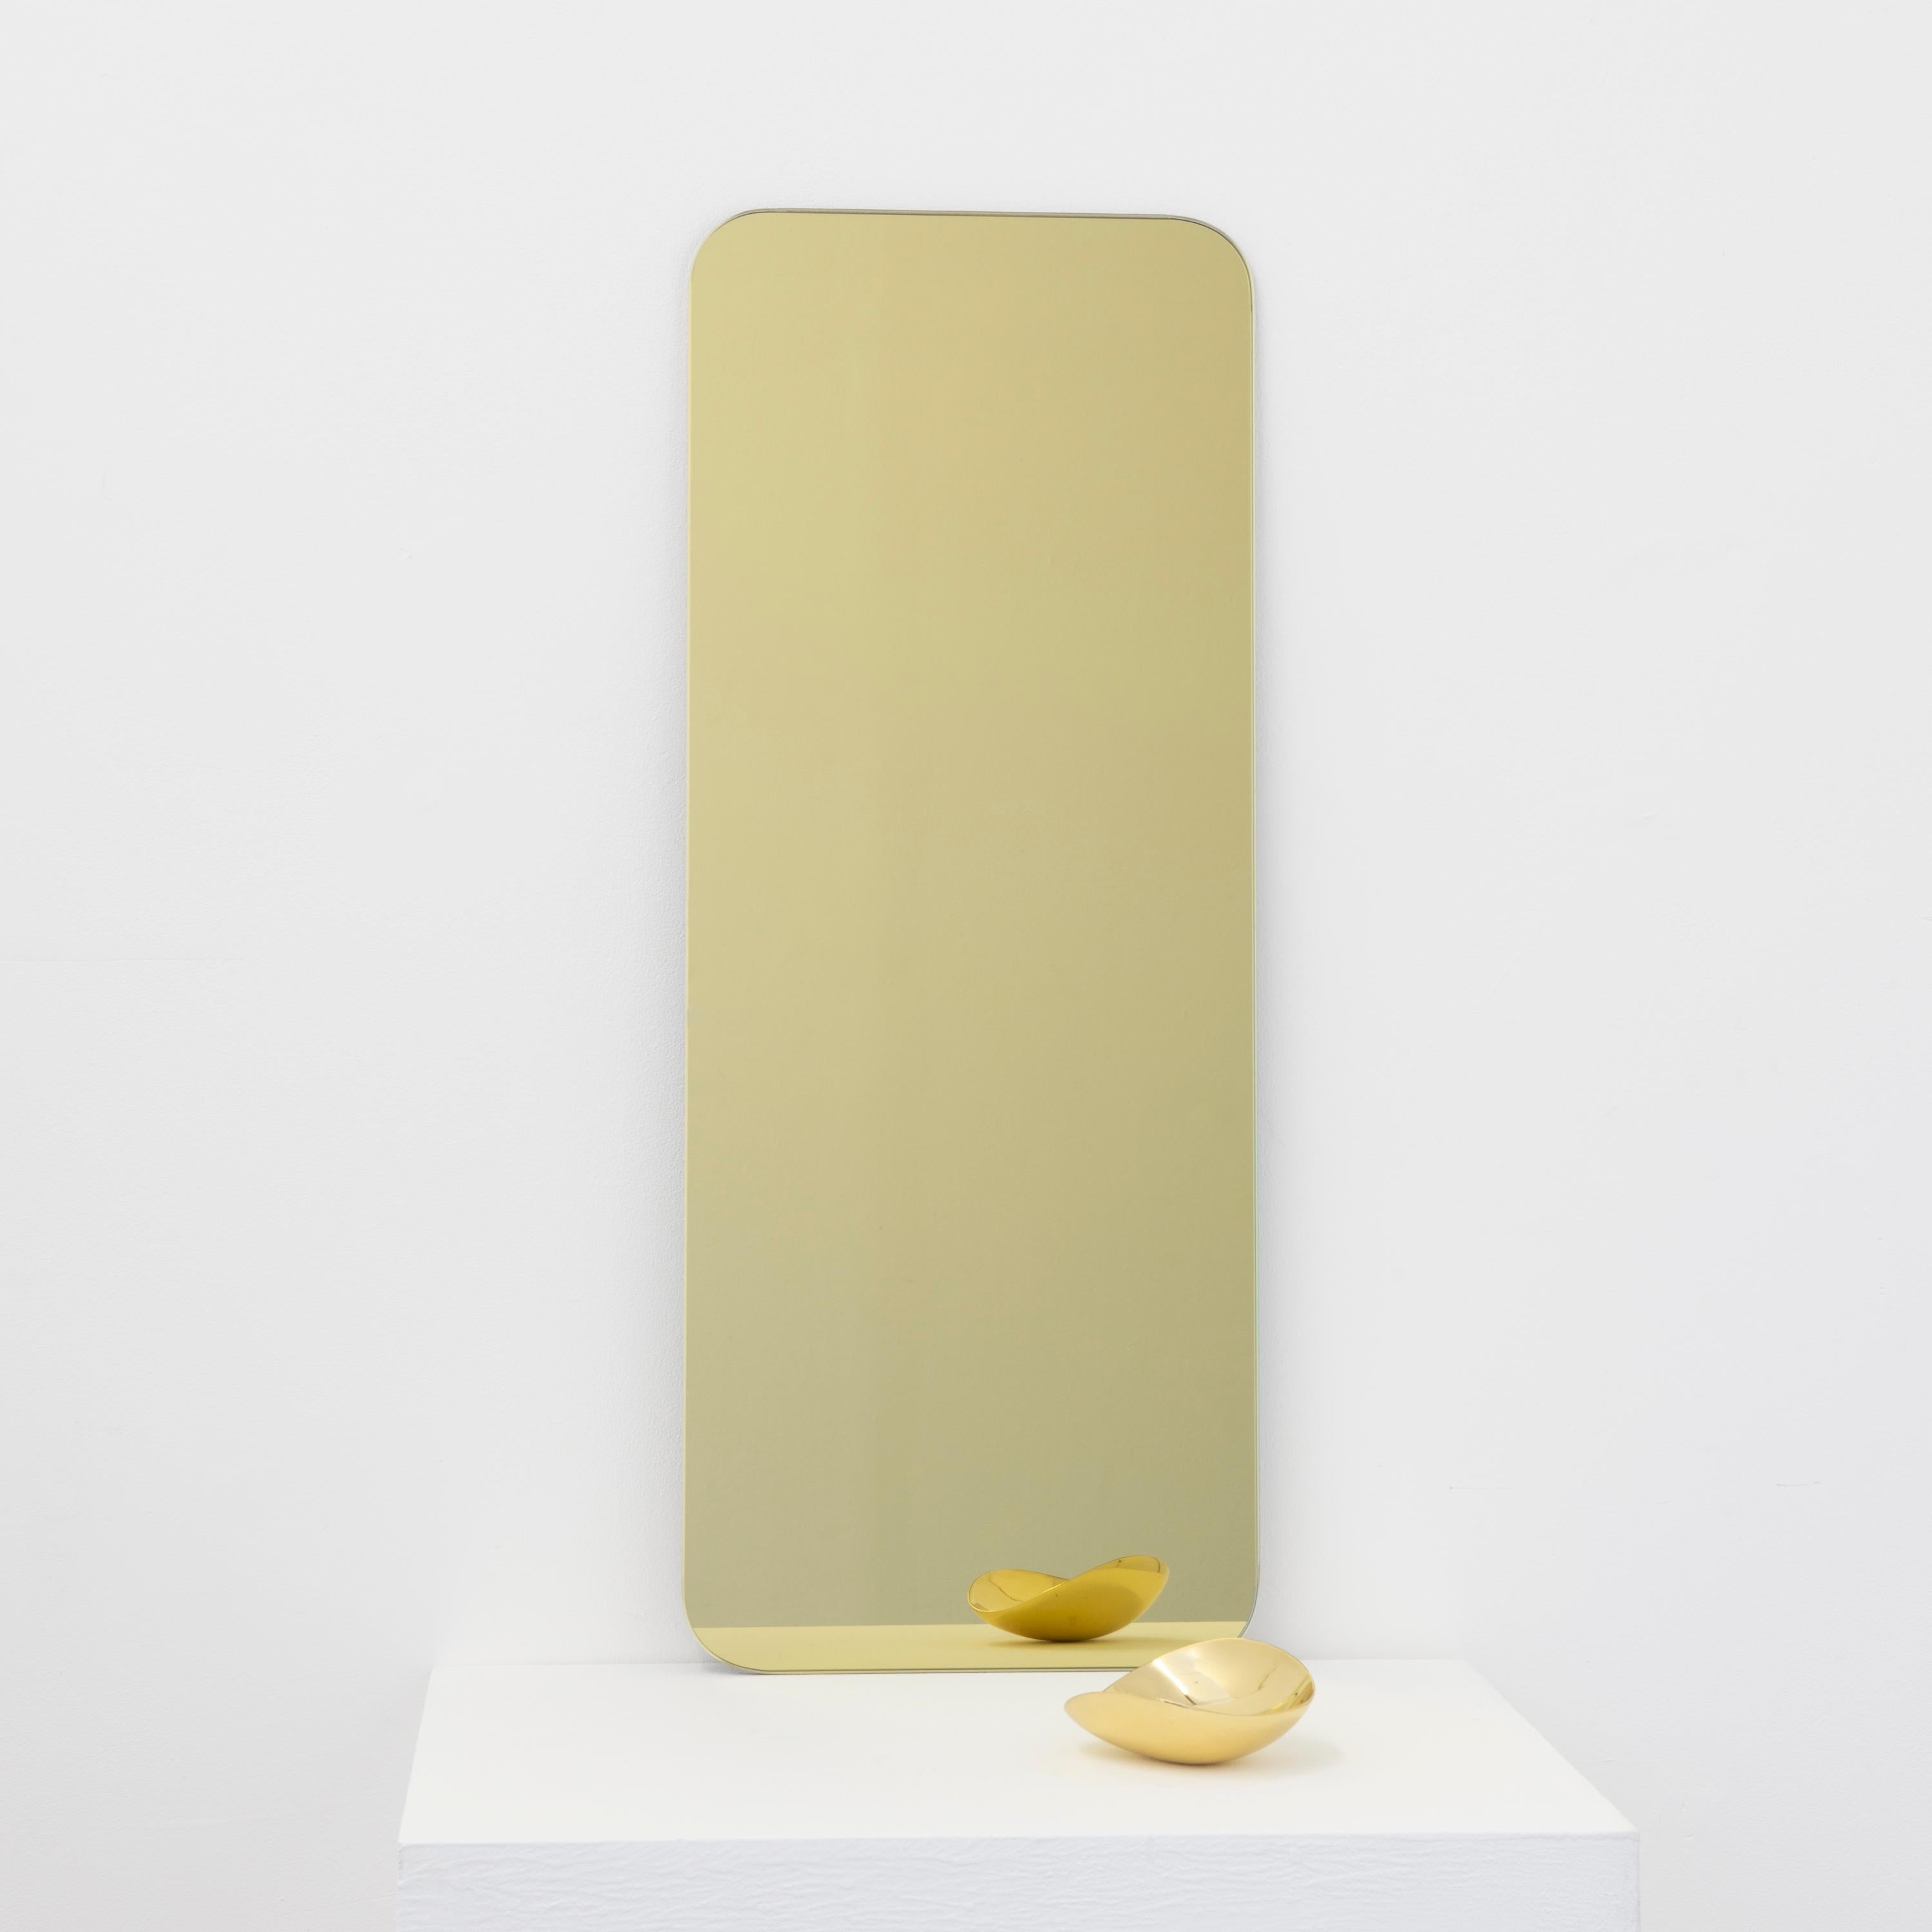 Quadris Gold Rectangular Frameless Minimalist Mirror, Medium In New Condition For Sale In London, GB